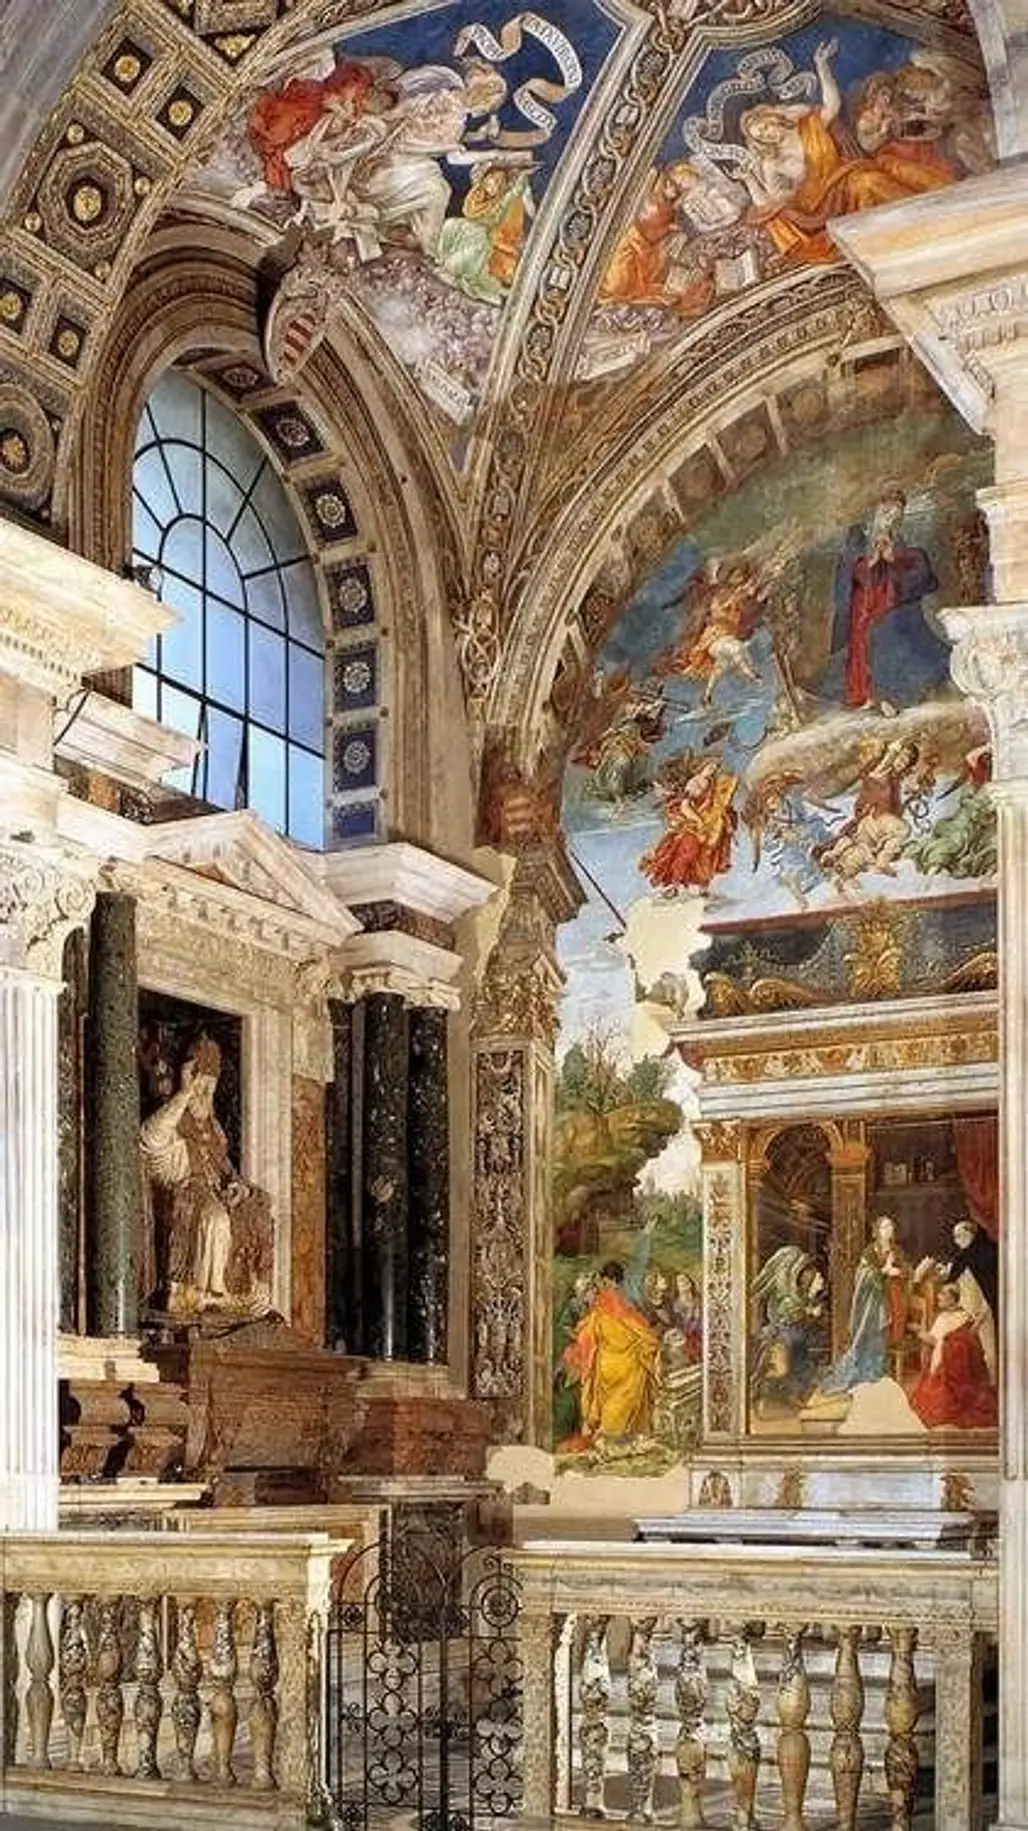 Carafa Chapel, Santa Maria Sopra Minerva